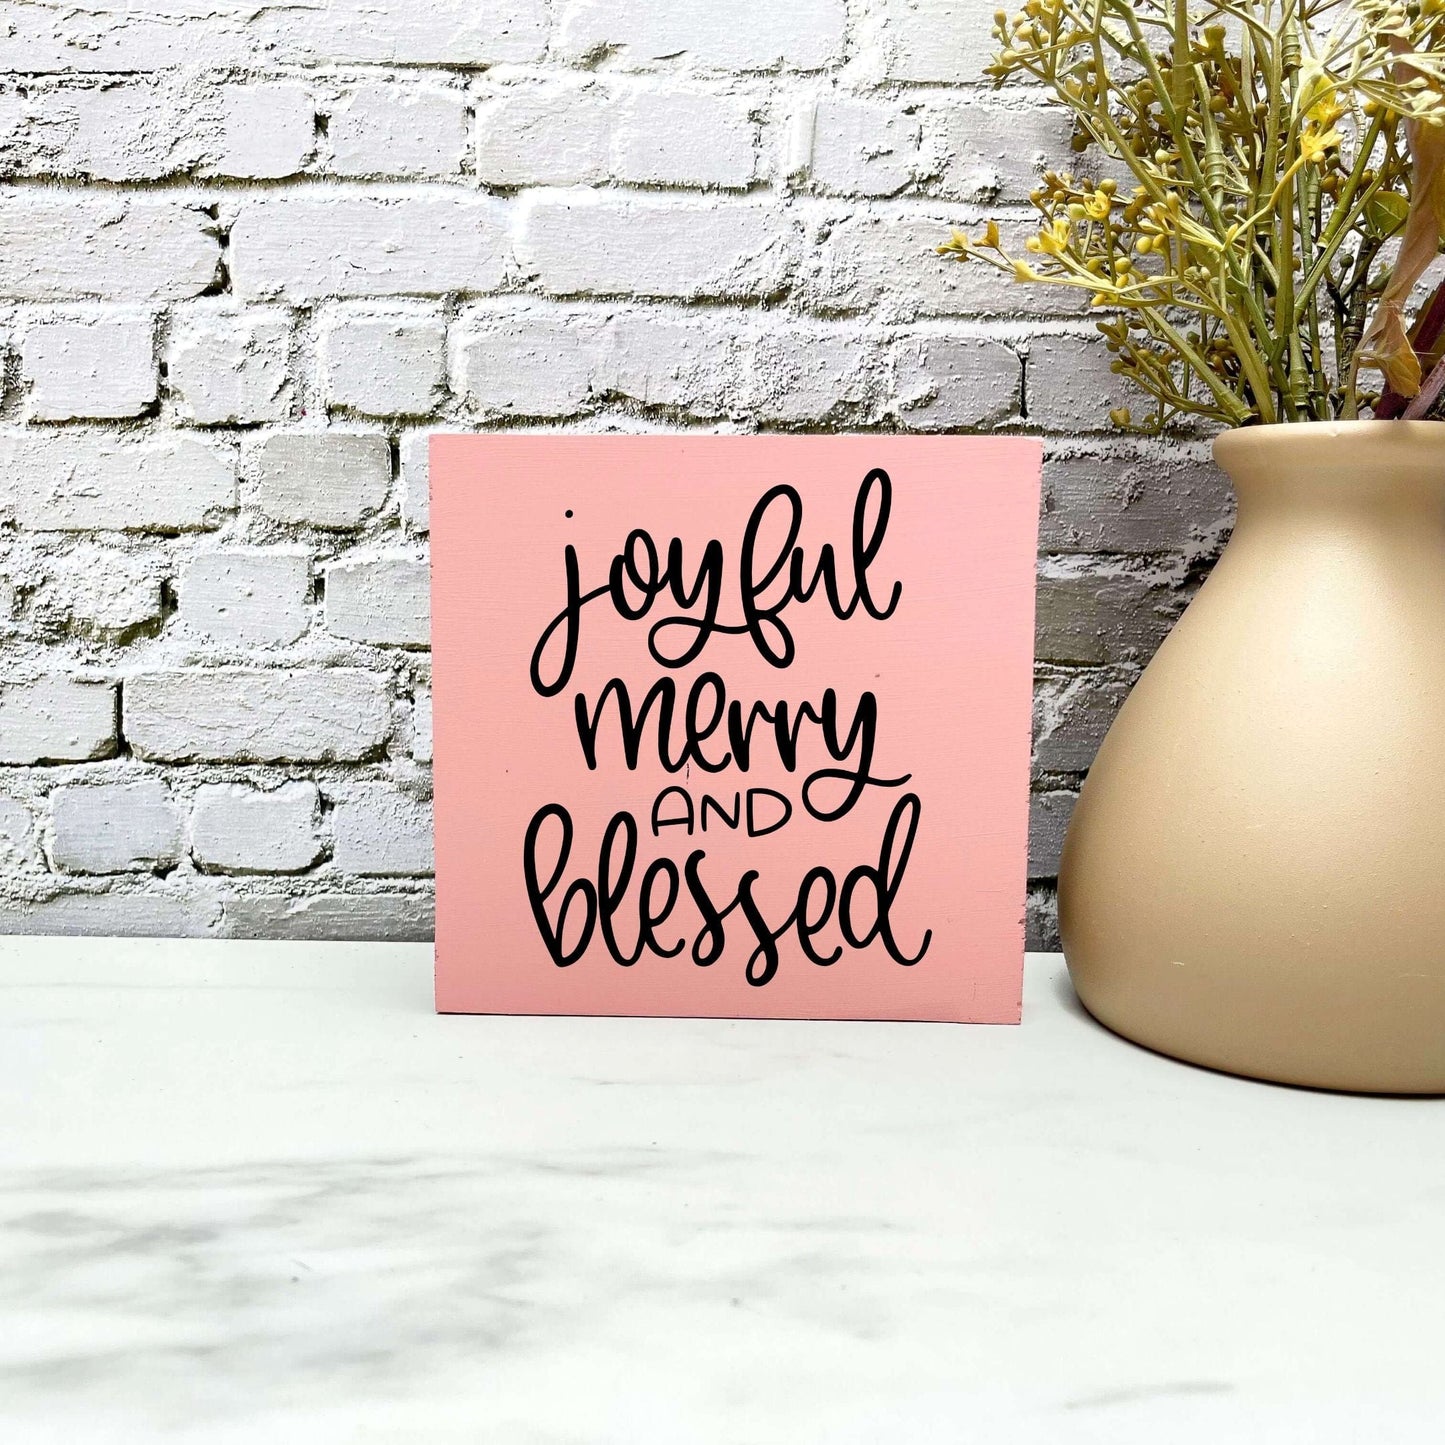 Joyful merry blessed Christmas sign, christmas wood signs, christmas decor, home decor